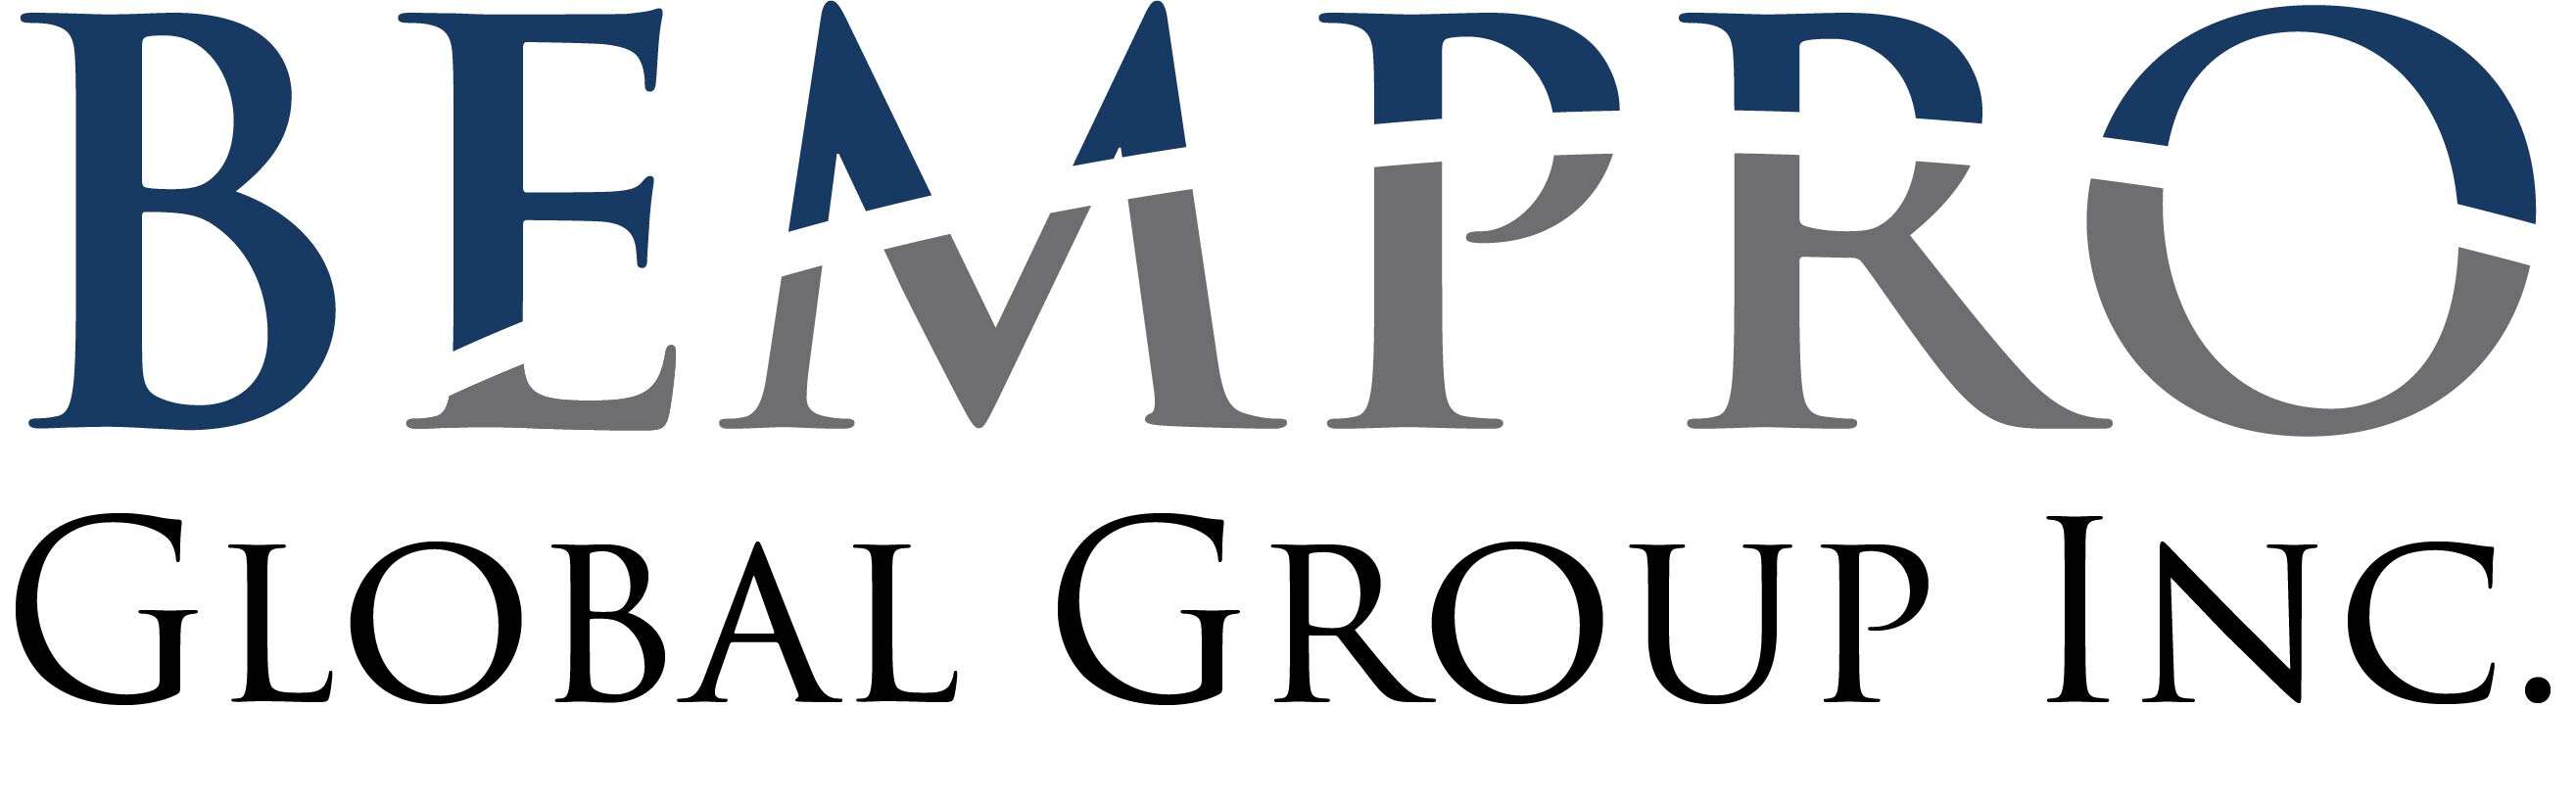 BEMPRO Global Group Inc.